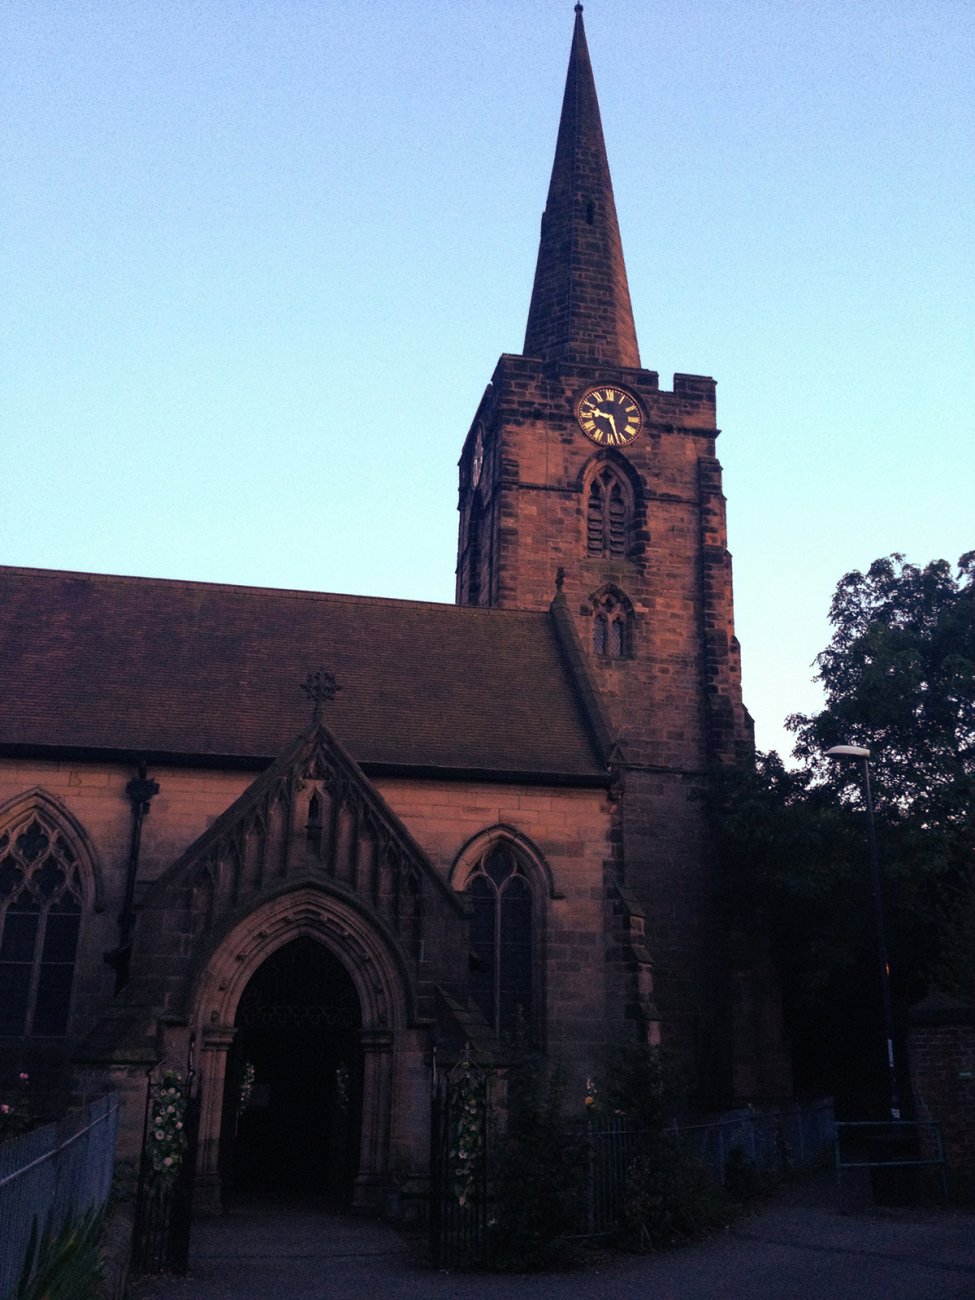 Photograph of St Werburgh's Church at dusk